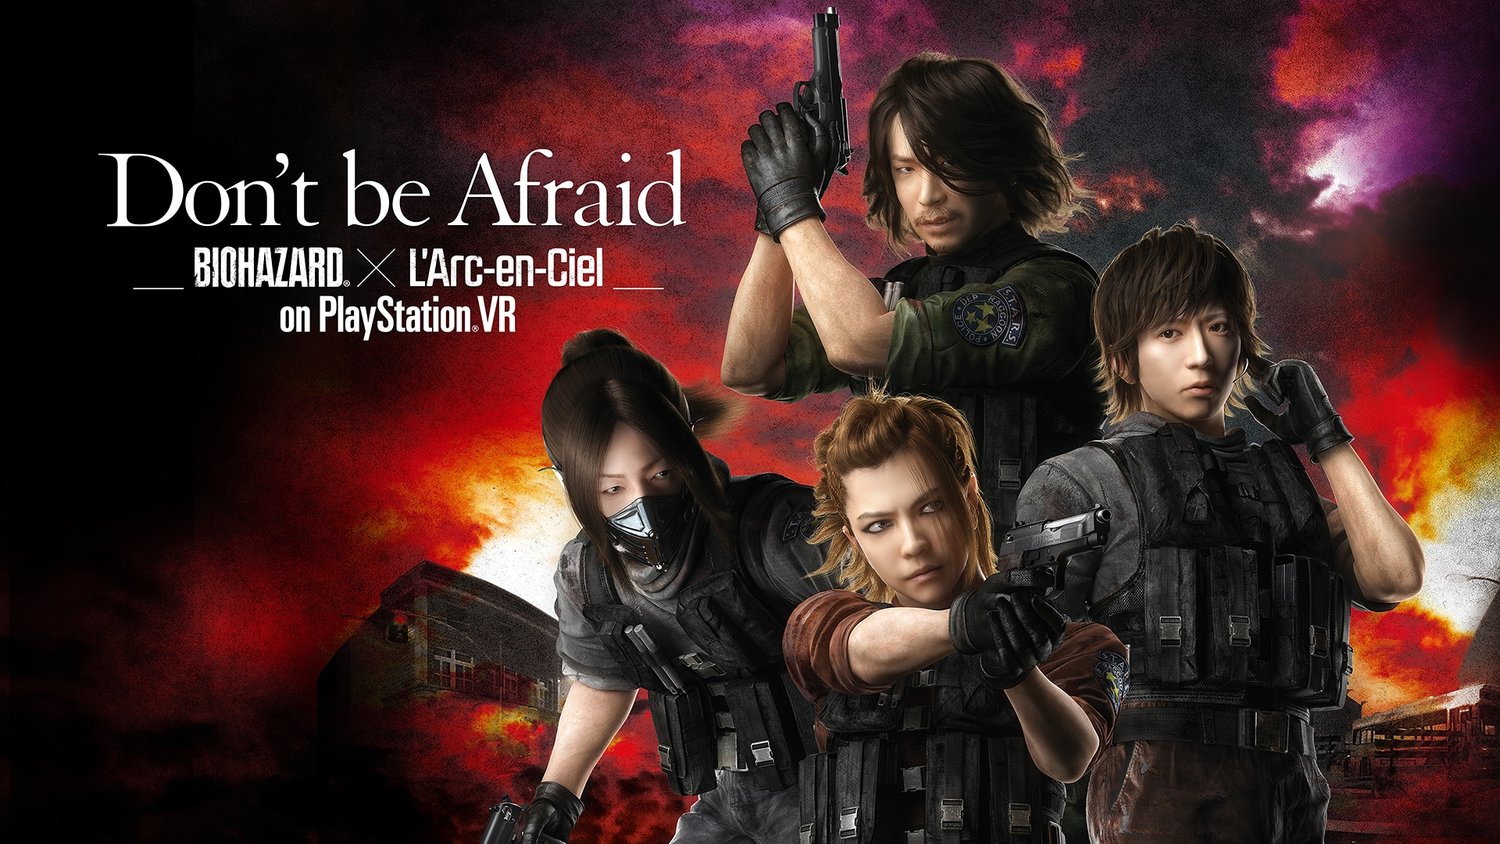 Resident evil саундтреки. Don't be afraid. Обои на андроид Biohazard. Обои на рабочий стол обитель зла Милла Йовович.